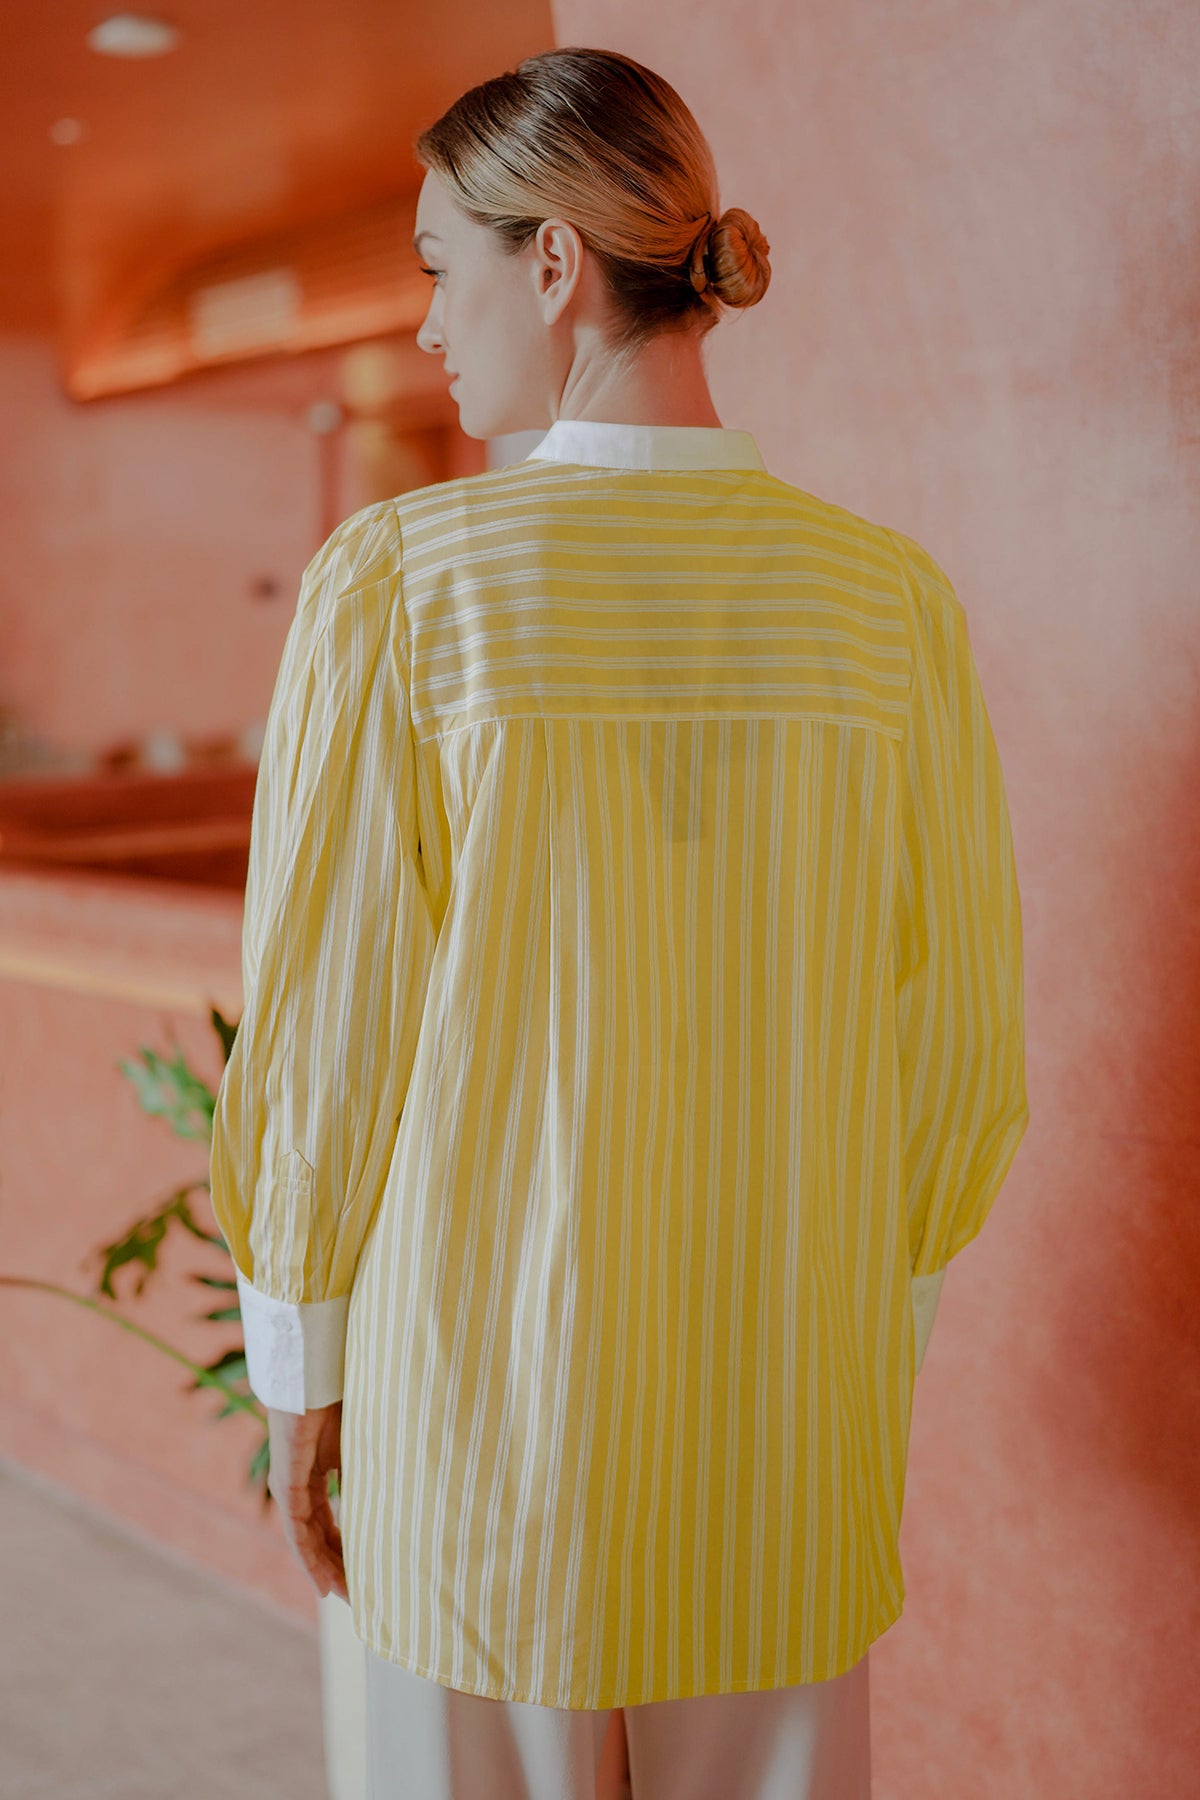 Double Striped Shirt - Yellow